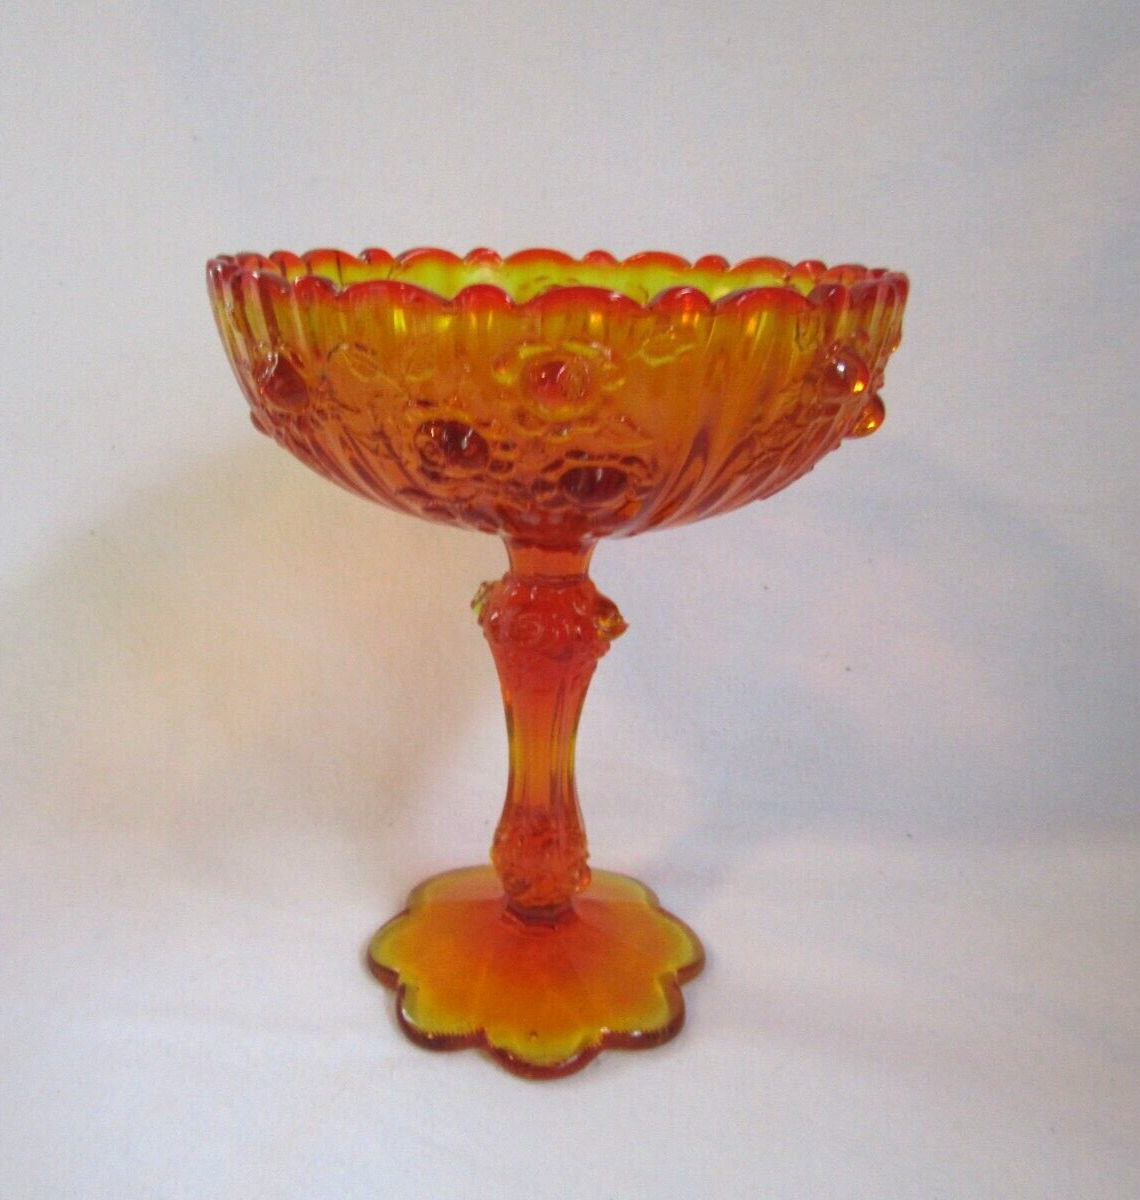 VINTAGE FENTON ART GLASS ORANGE PEDESTAL CABBAGE ROSE COMPOTE CANDY DISH GLOWS